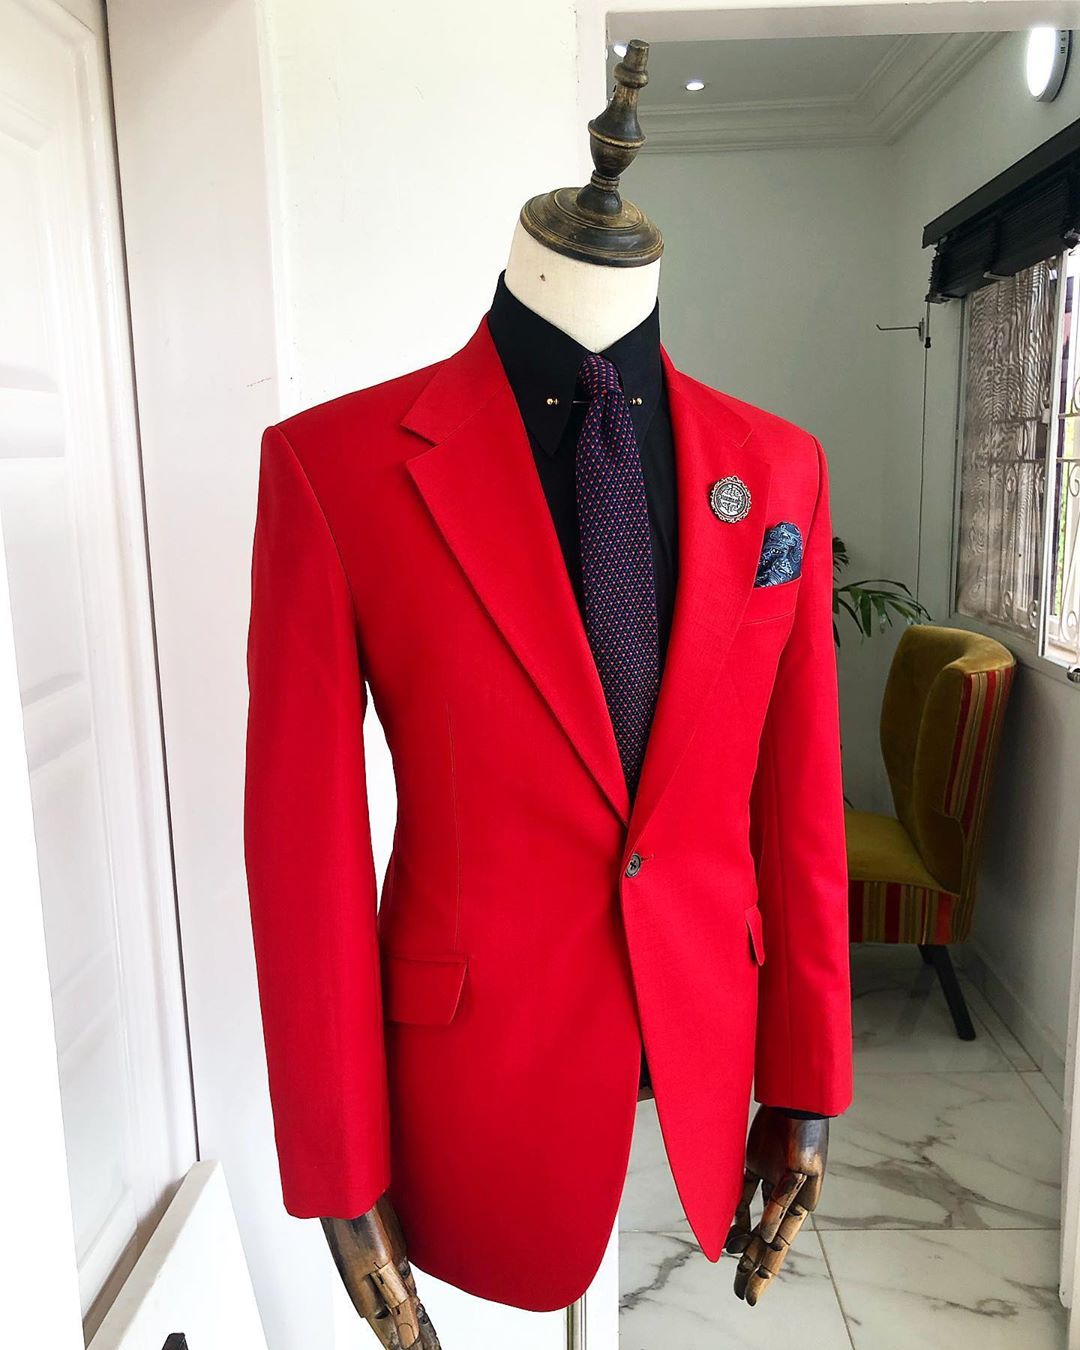 Dejiandkola - A Tomato Red “French“ Safari Suit. Online